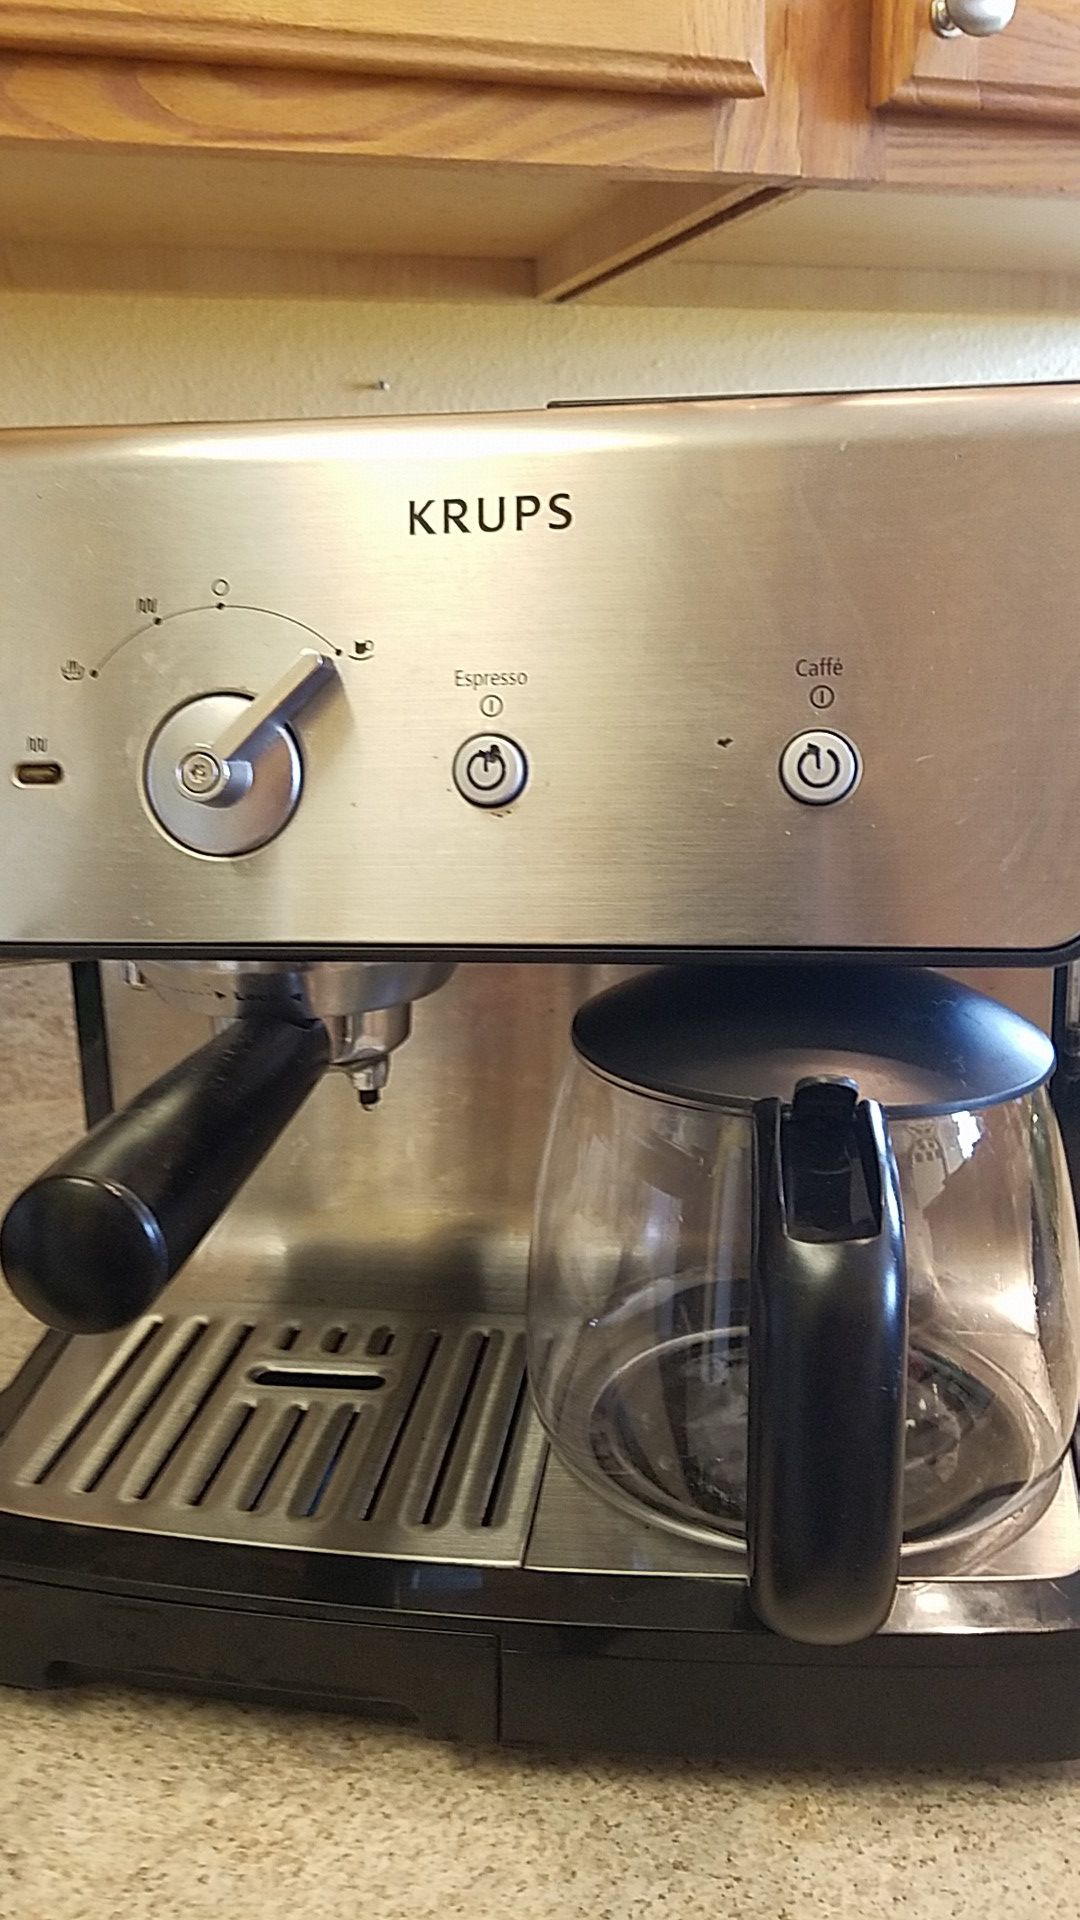 Krups coffee and espresso maker